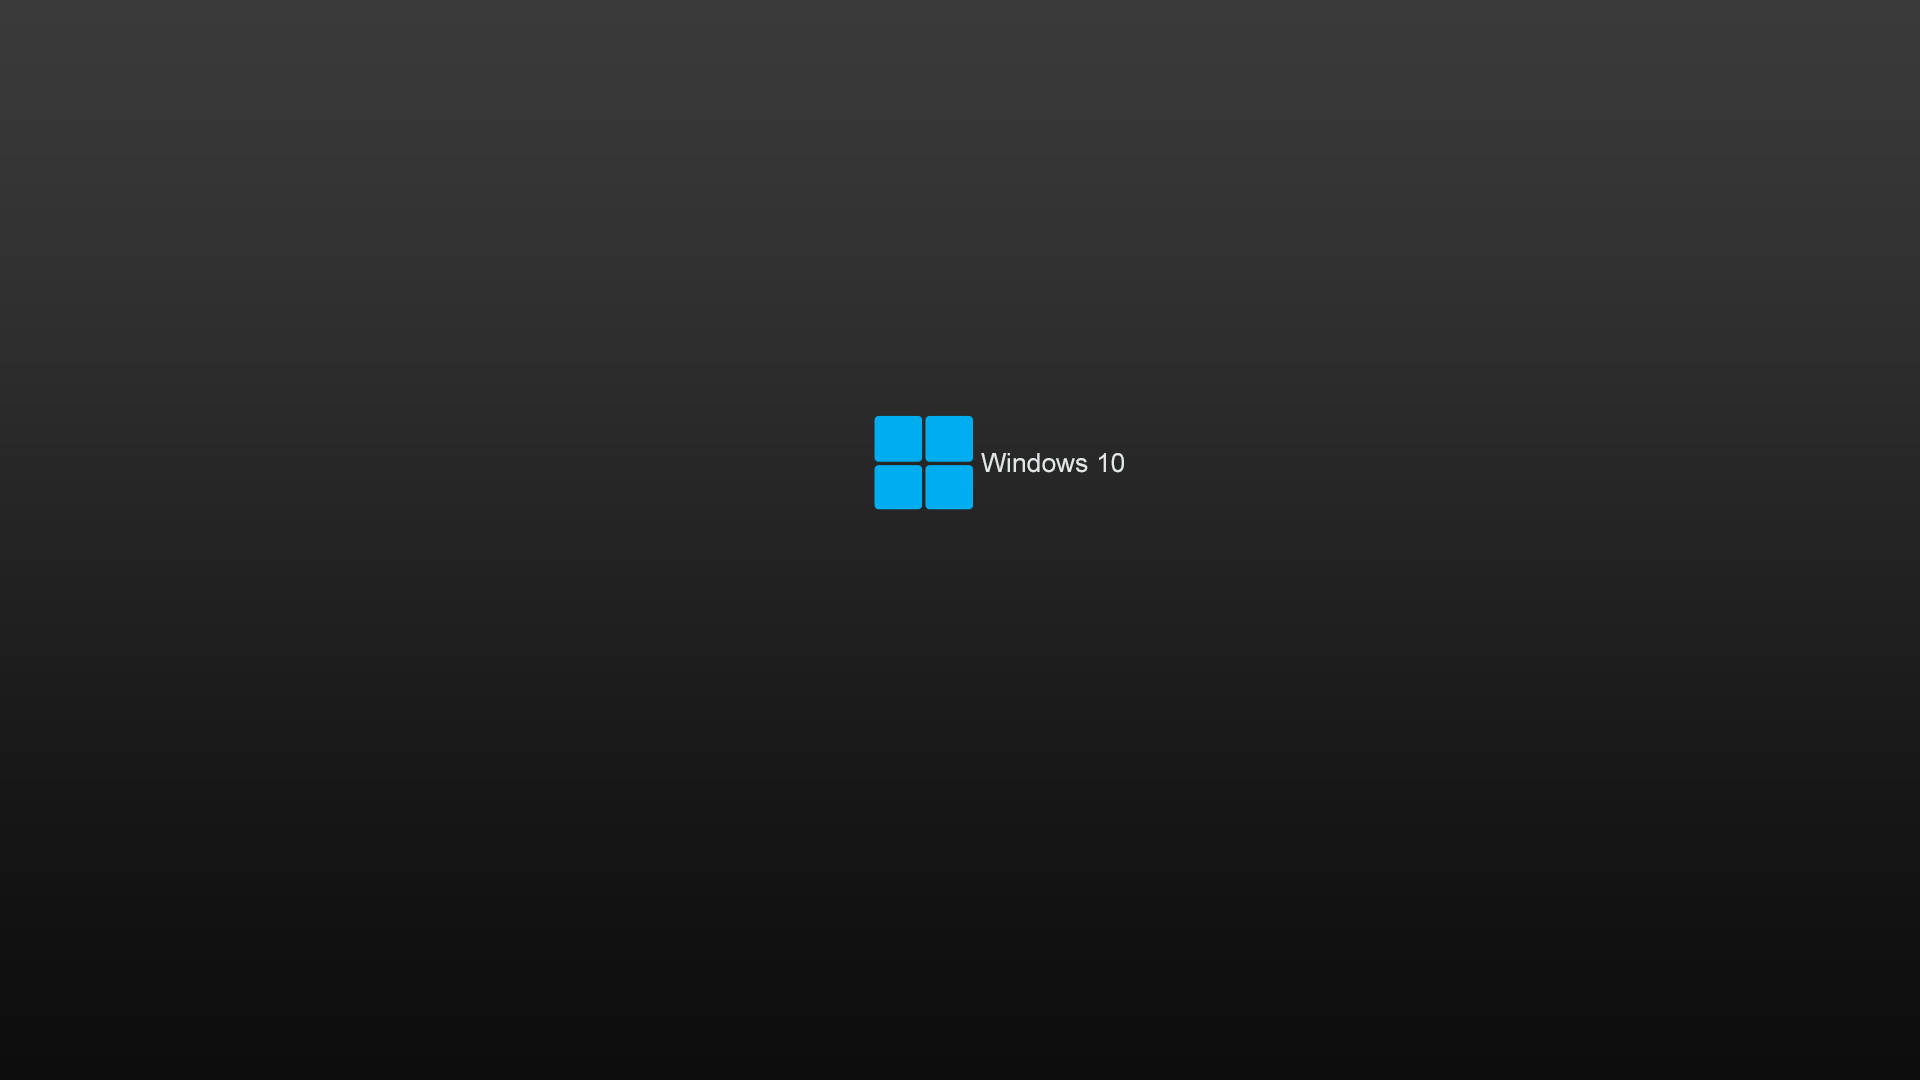 Simple Windows 10 Hd Logo Background